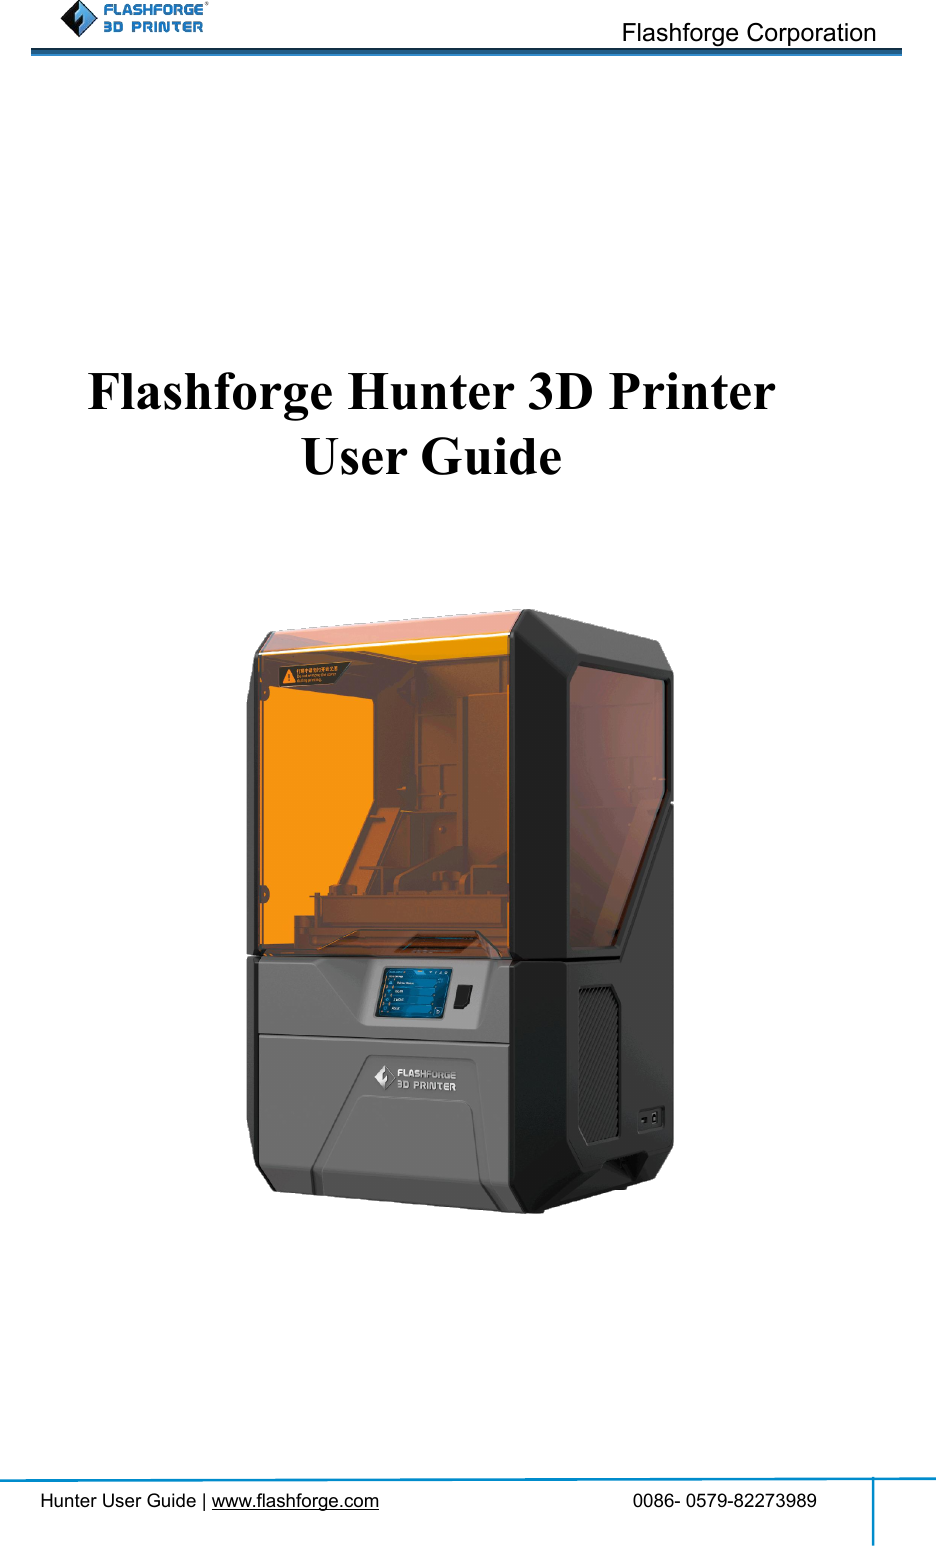 Flashforge CorporationHunter User Guide | www.flashforge.com 0086- 0579-82273989Flashforge Hunter 3D PrinterUser Guide